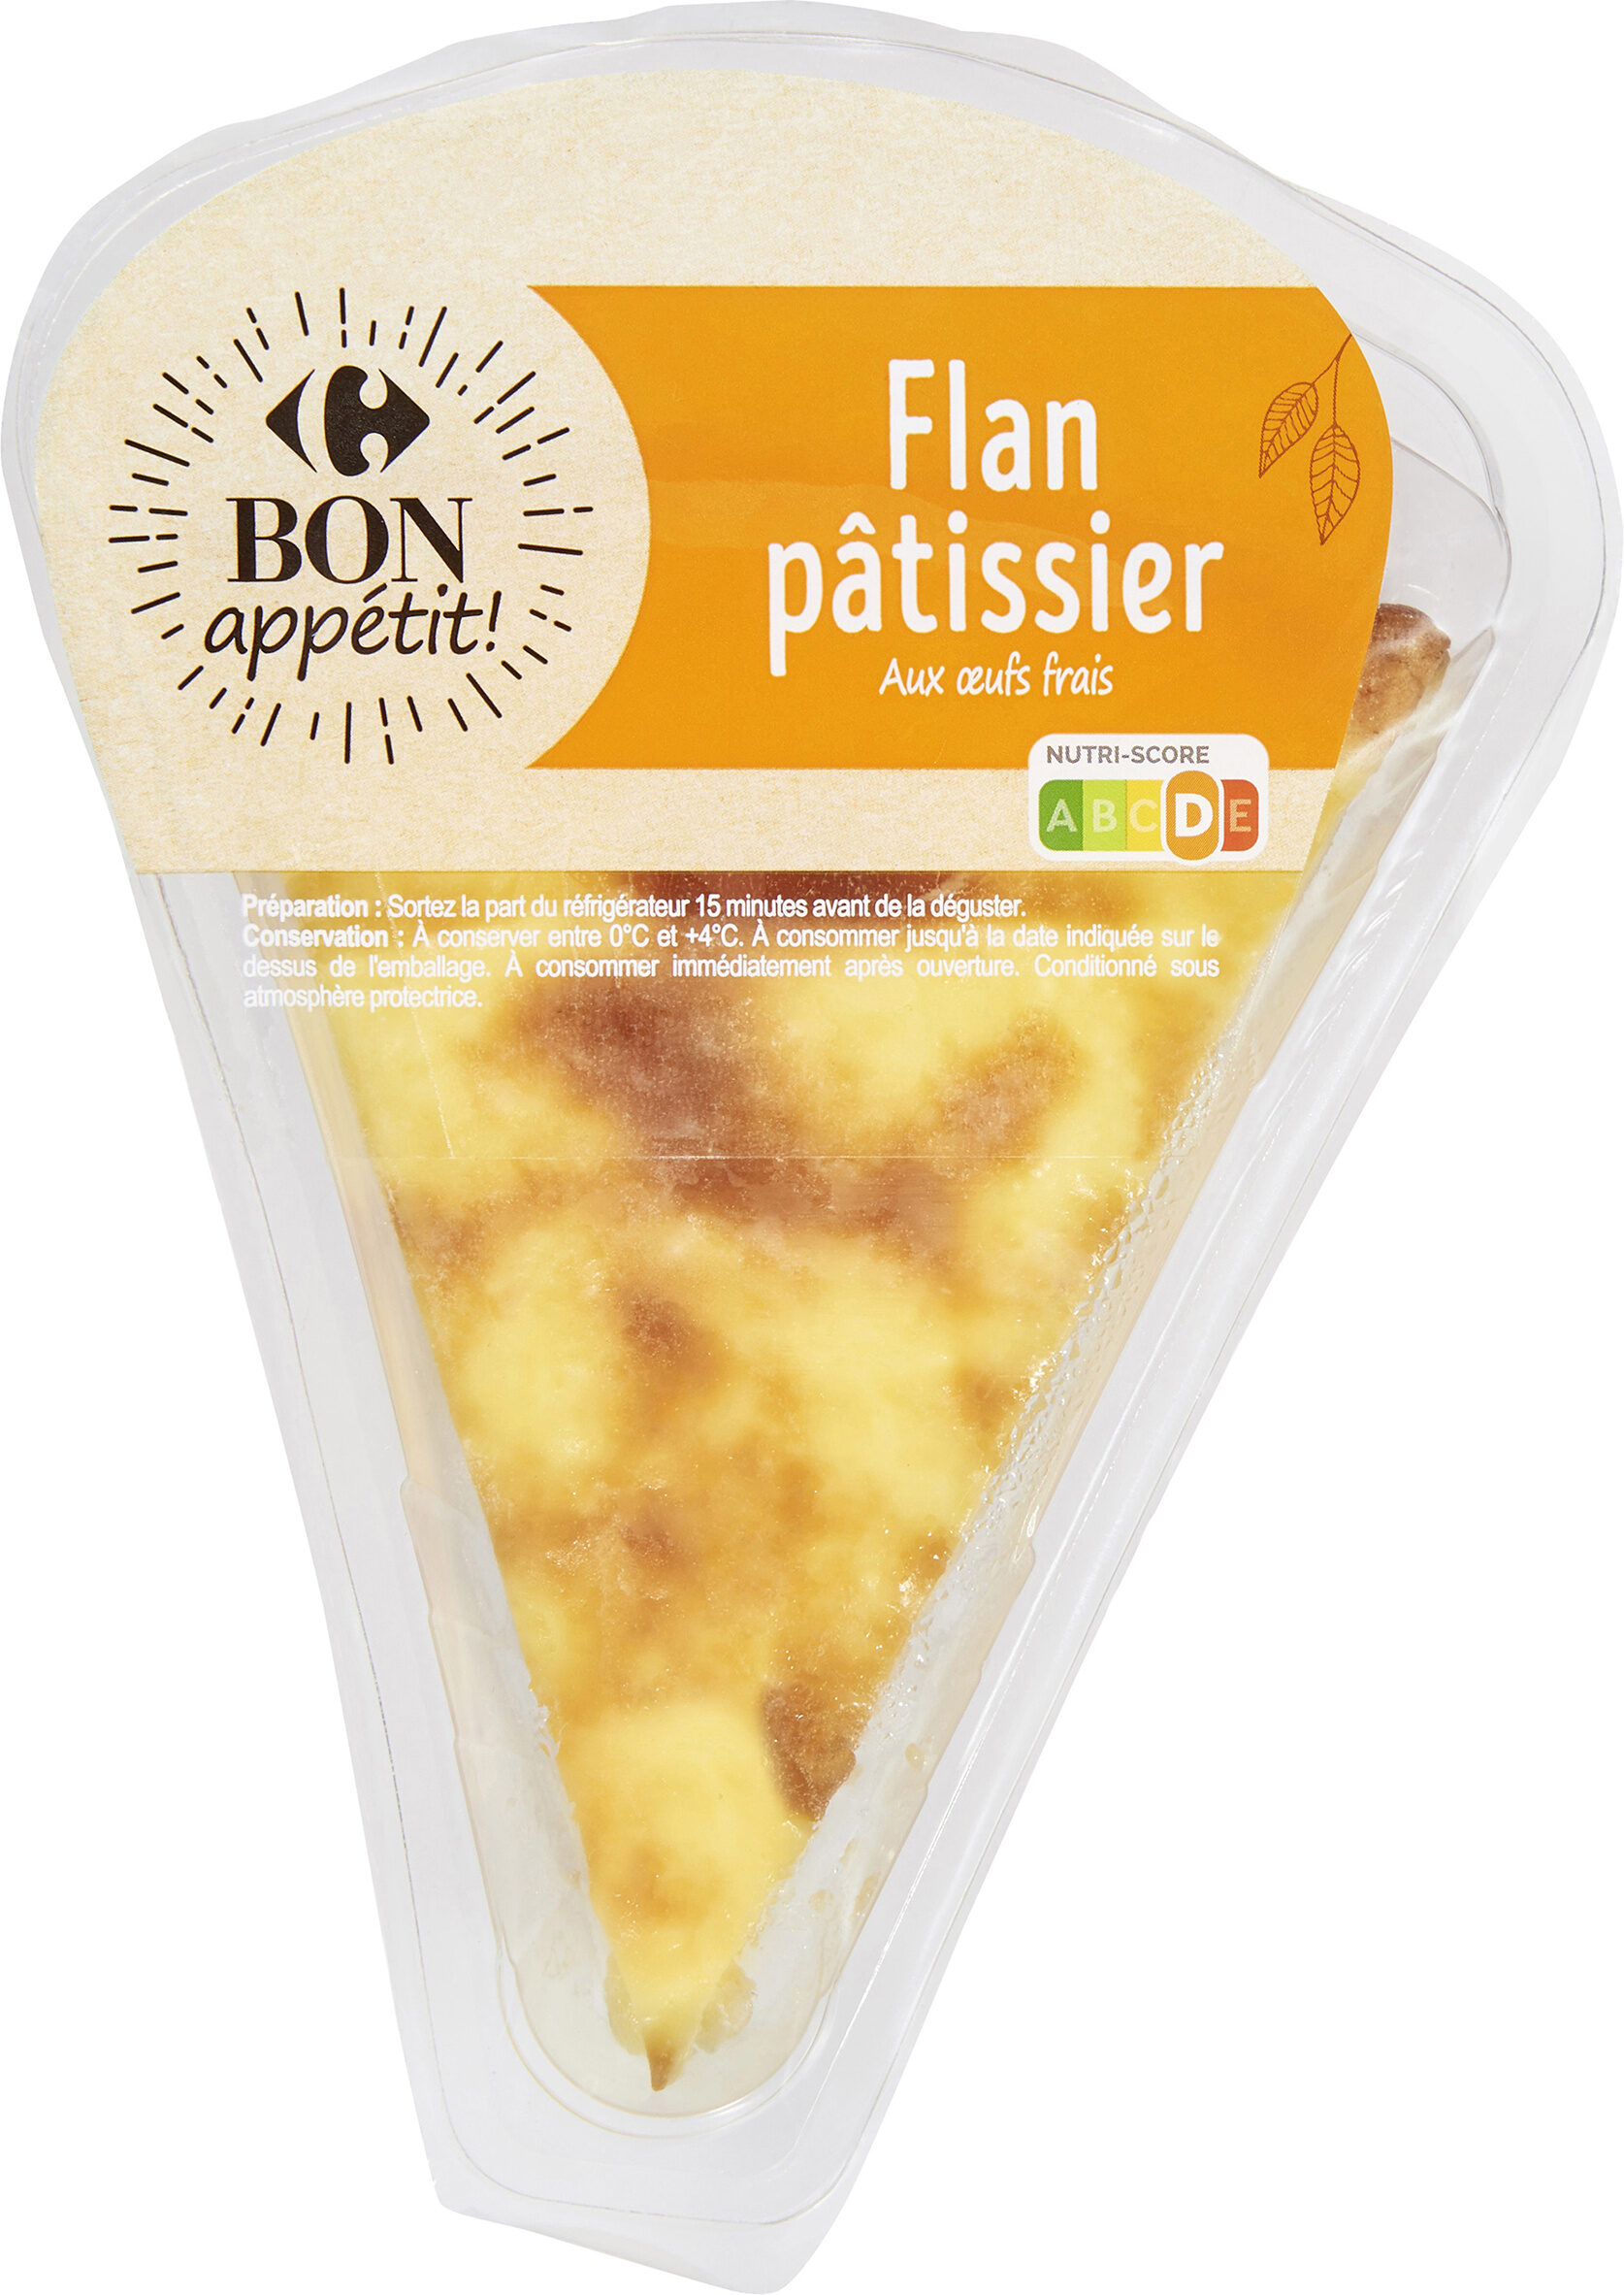 DESSERT Flan pâtissier - Produit